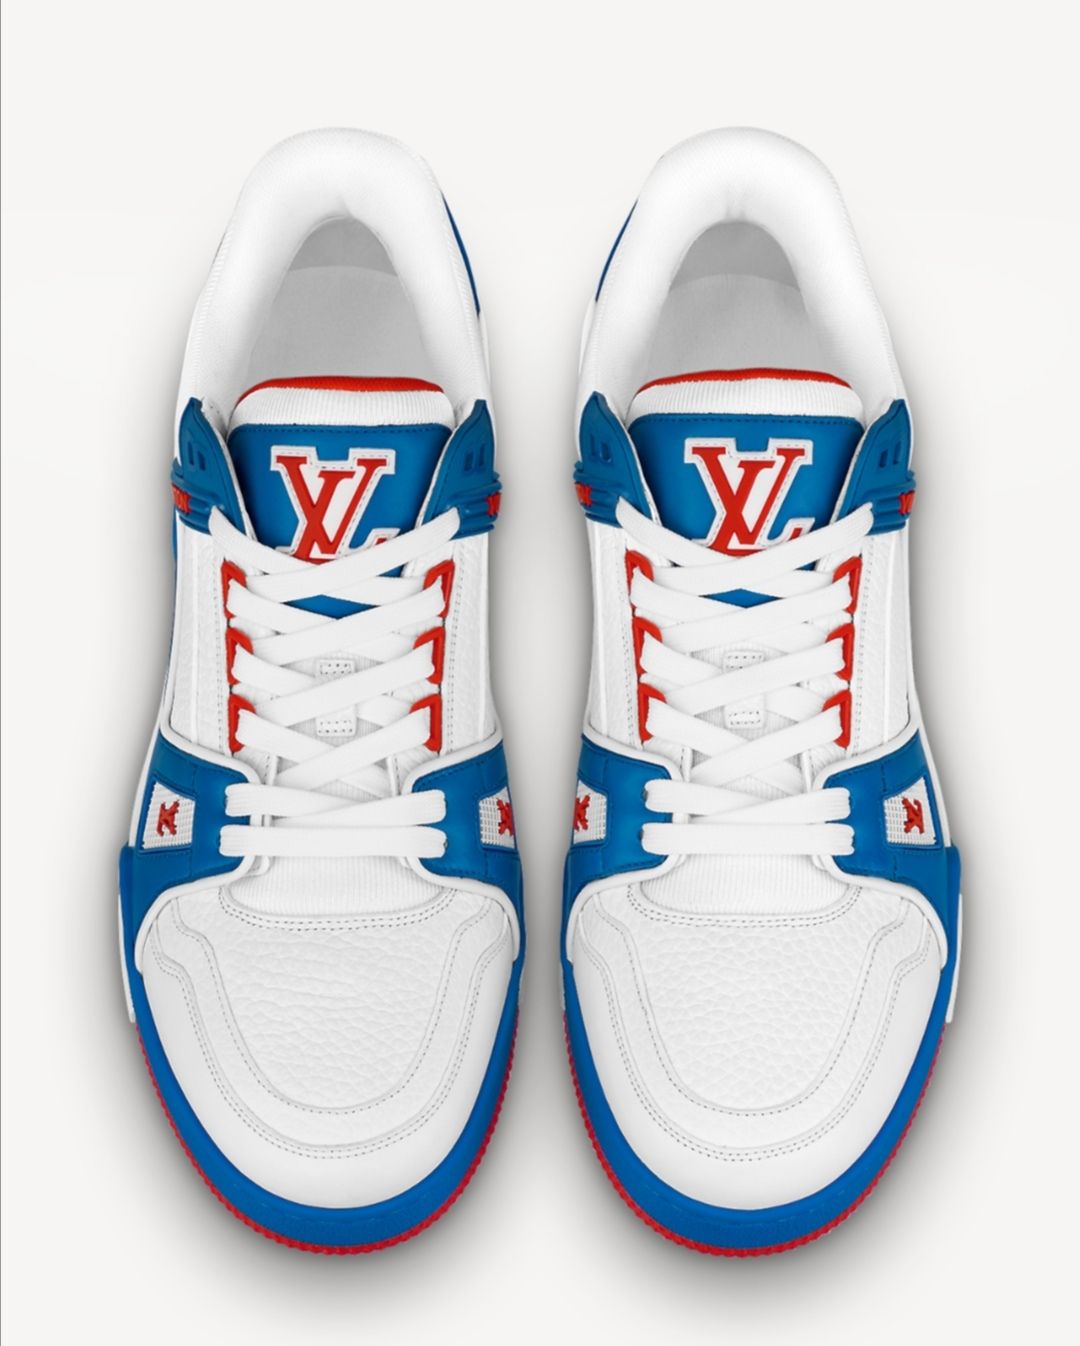 Louis Vuitton Louis Vuitton Virgil Trainer Low Sneaker Red/White